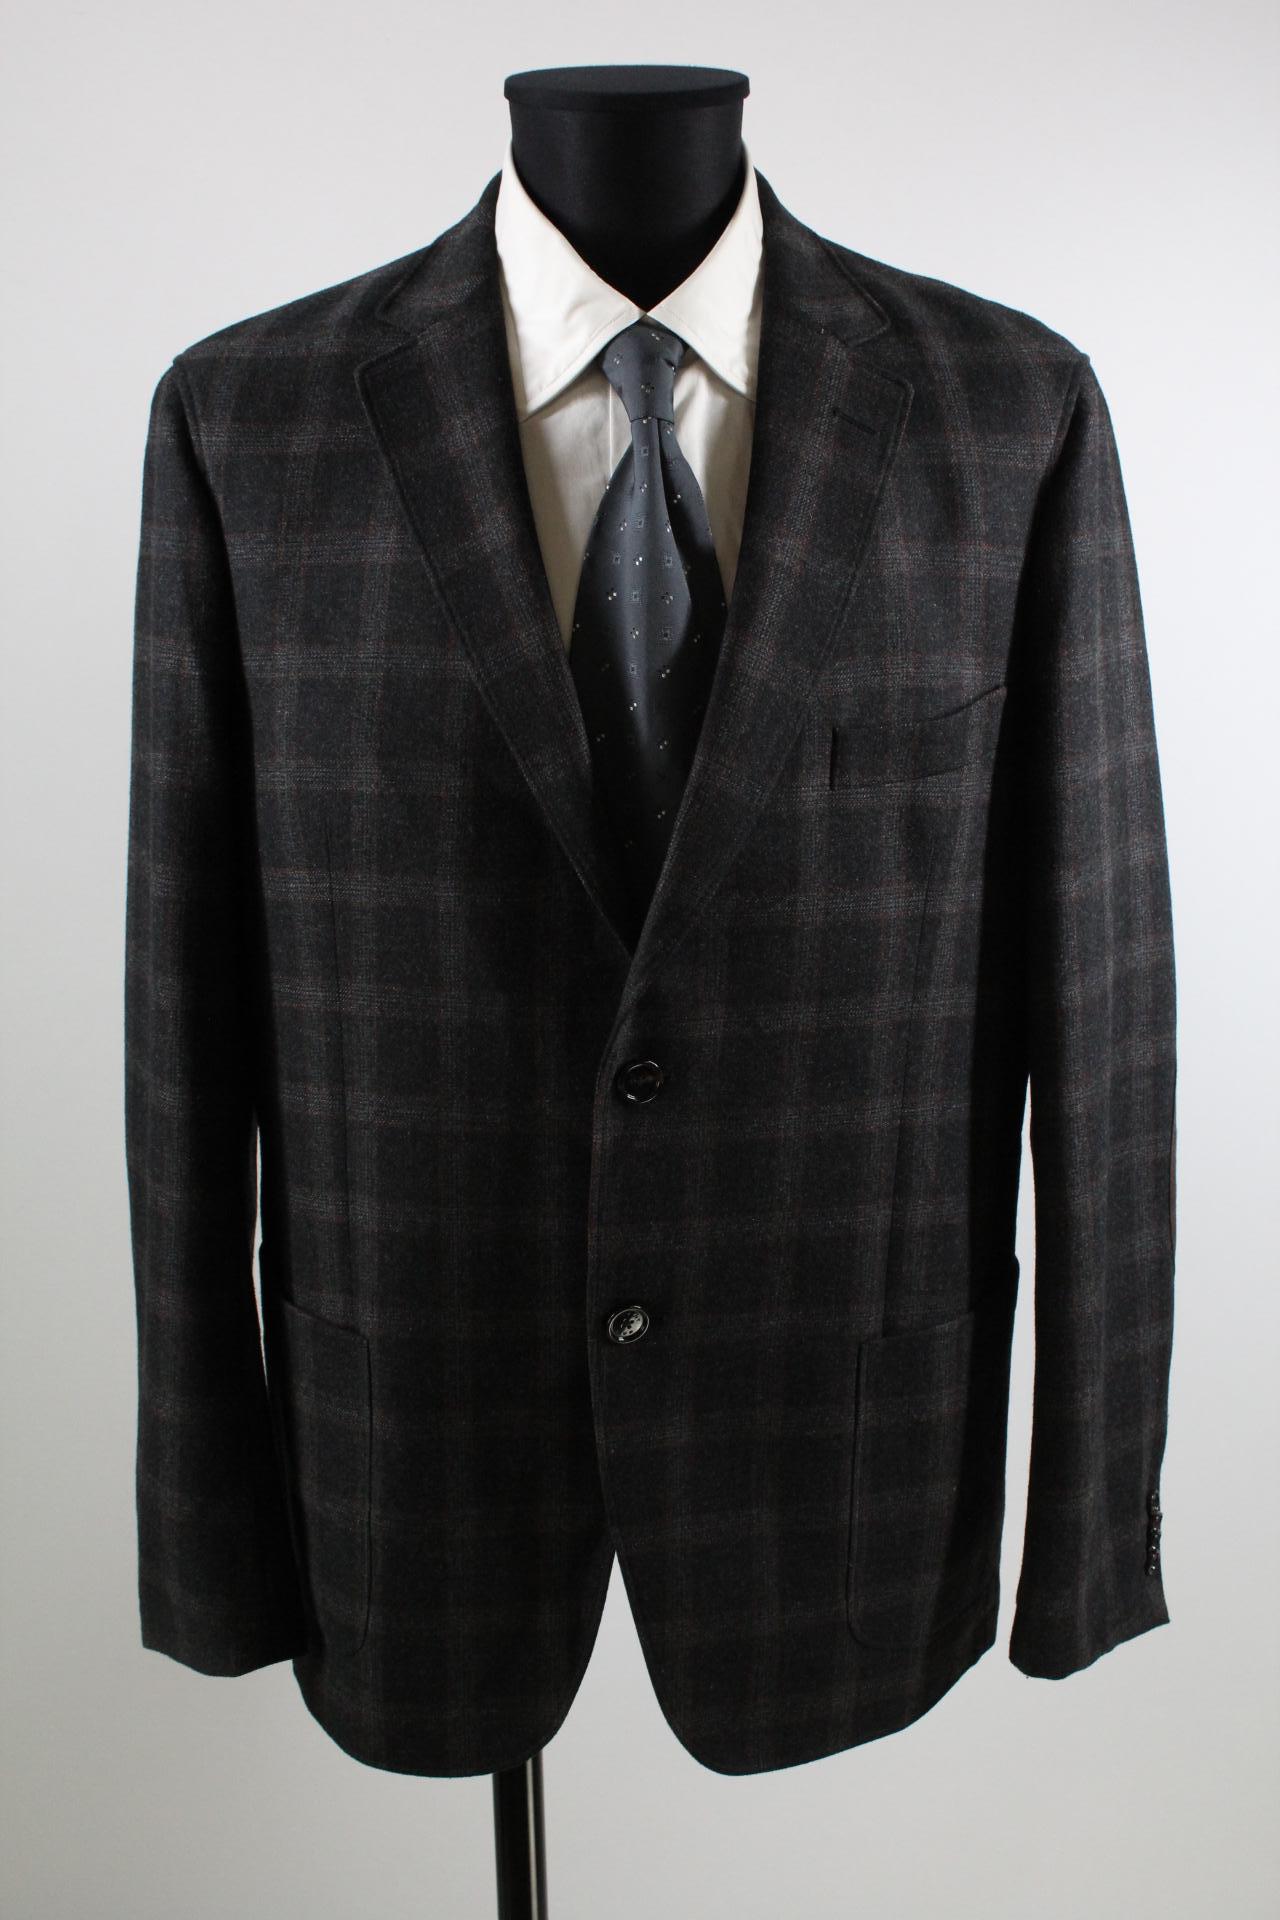 Gant Tweed-Sakko braun/grau Größe 54